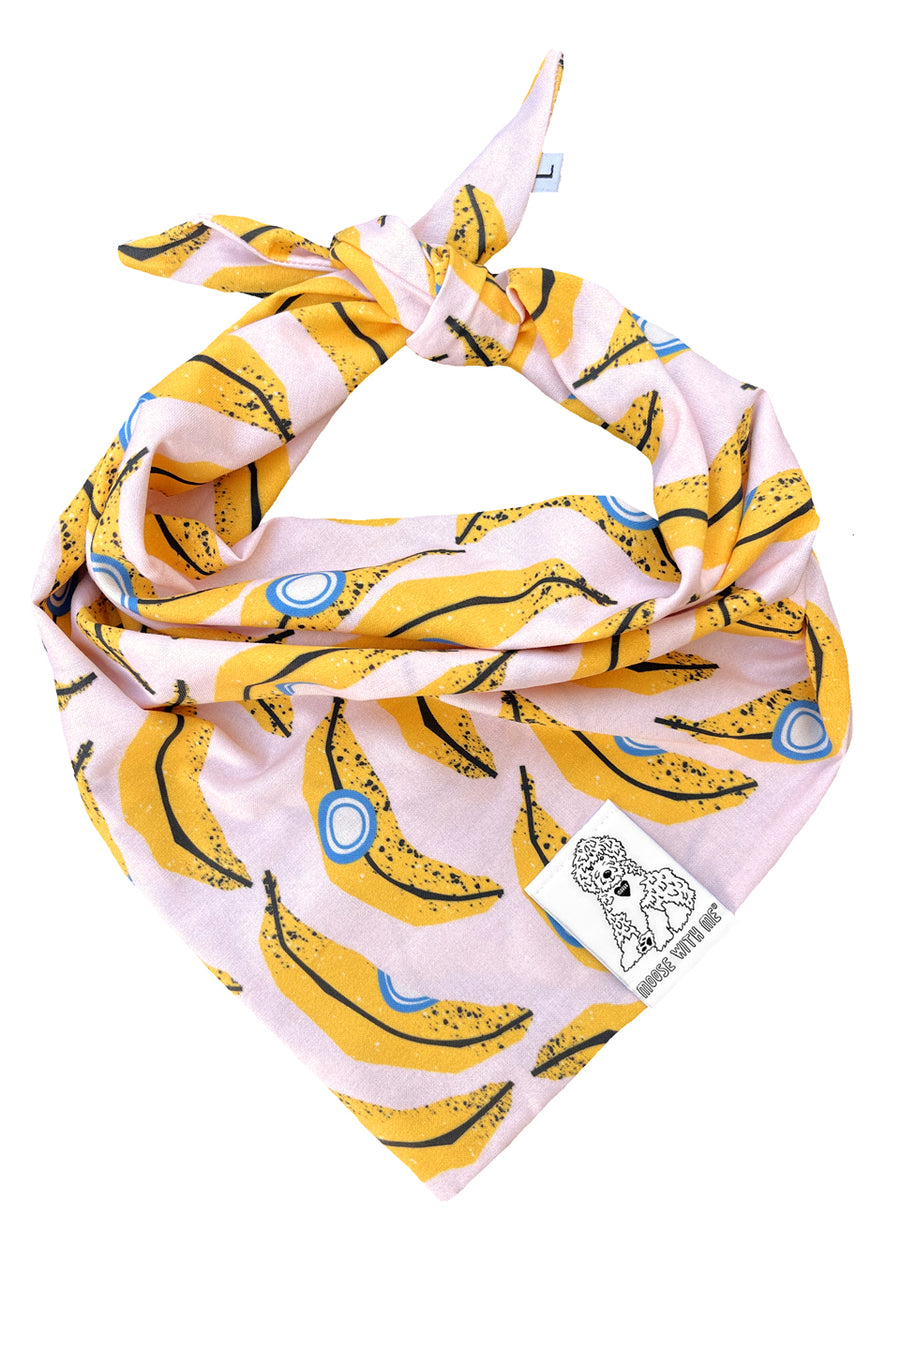 Dog Bandana Bananas - Customize with Interchangeable Velcro Patches